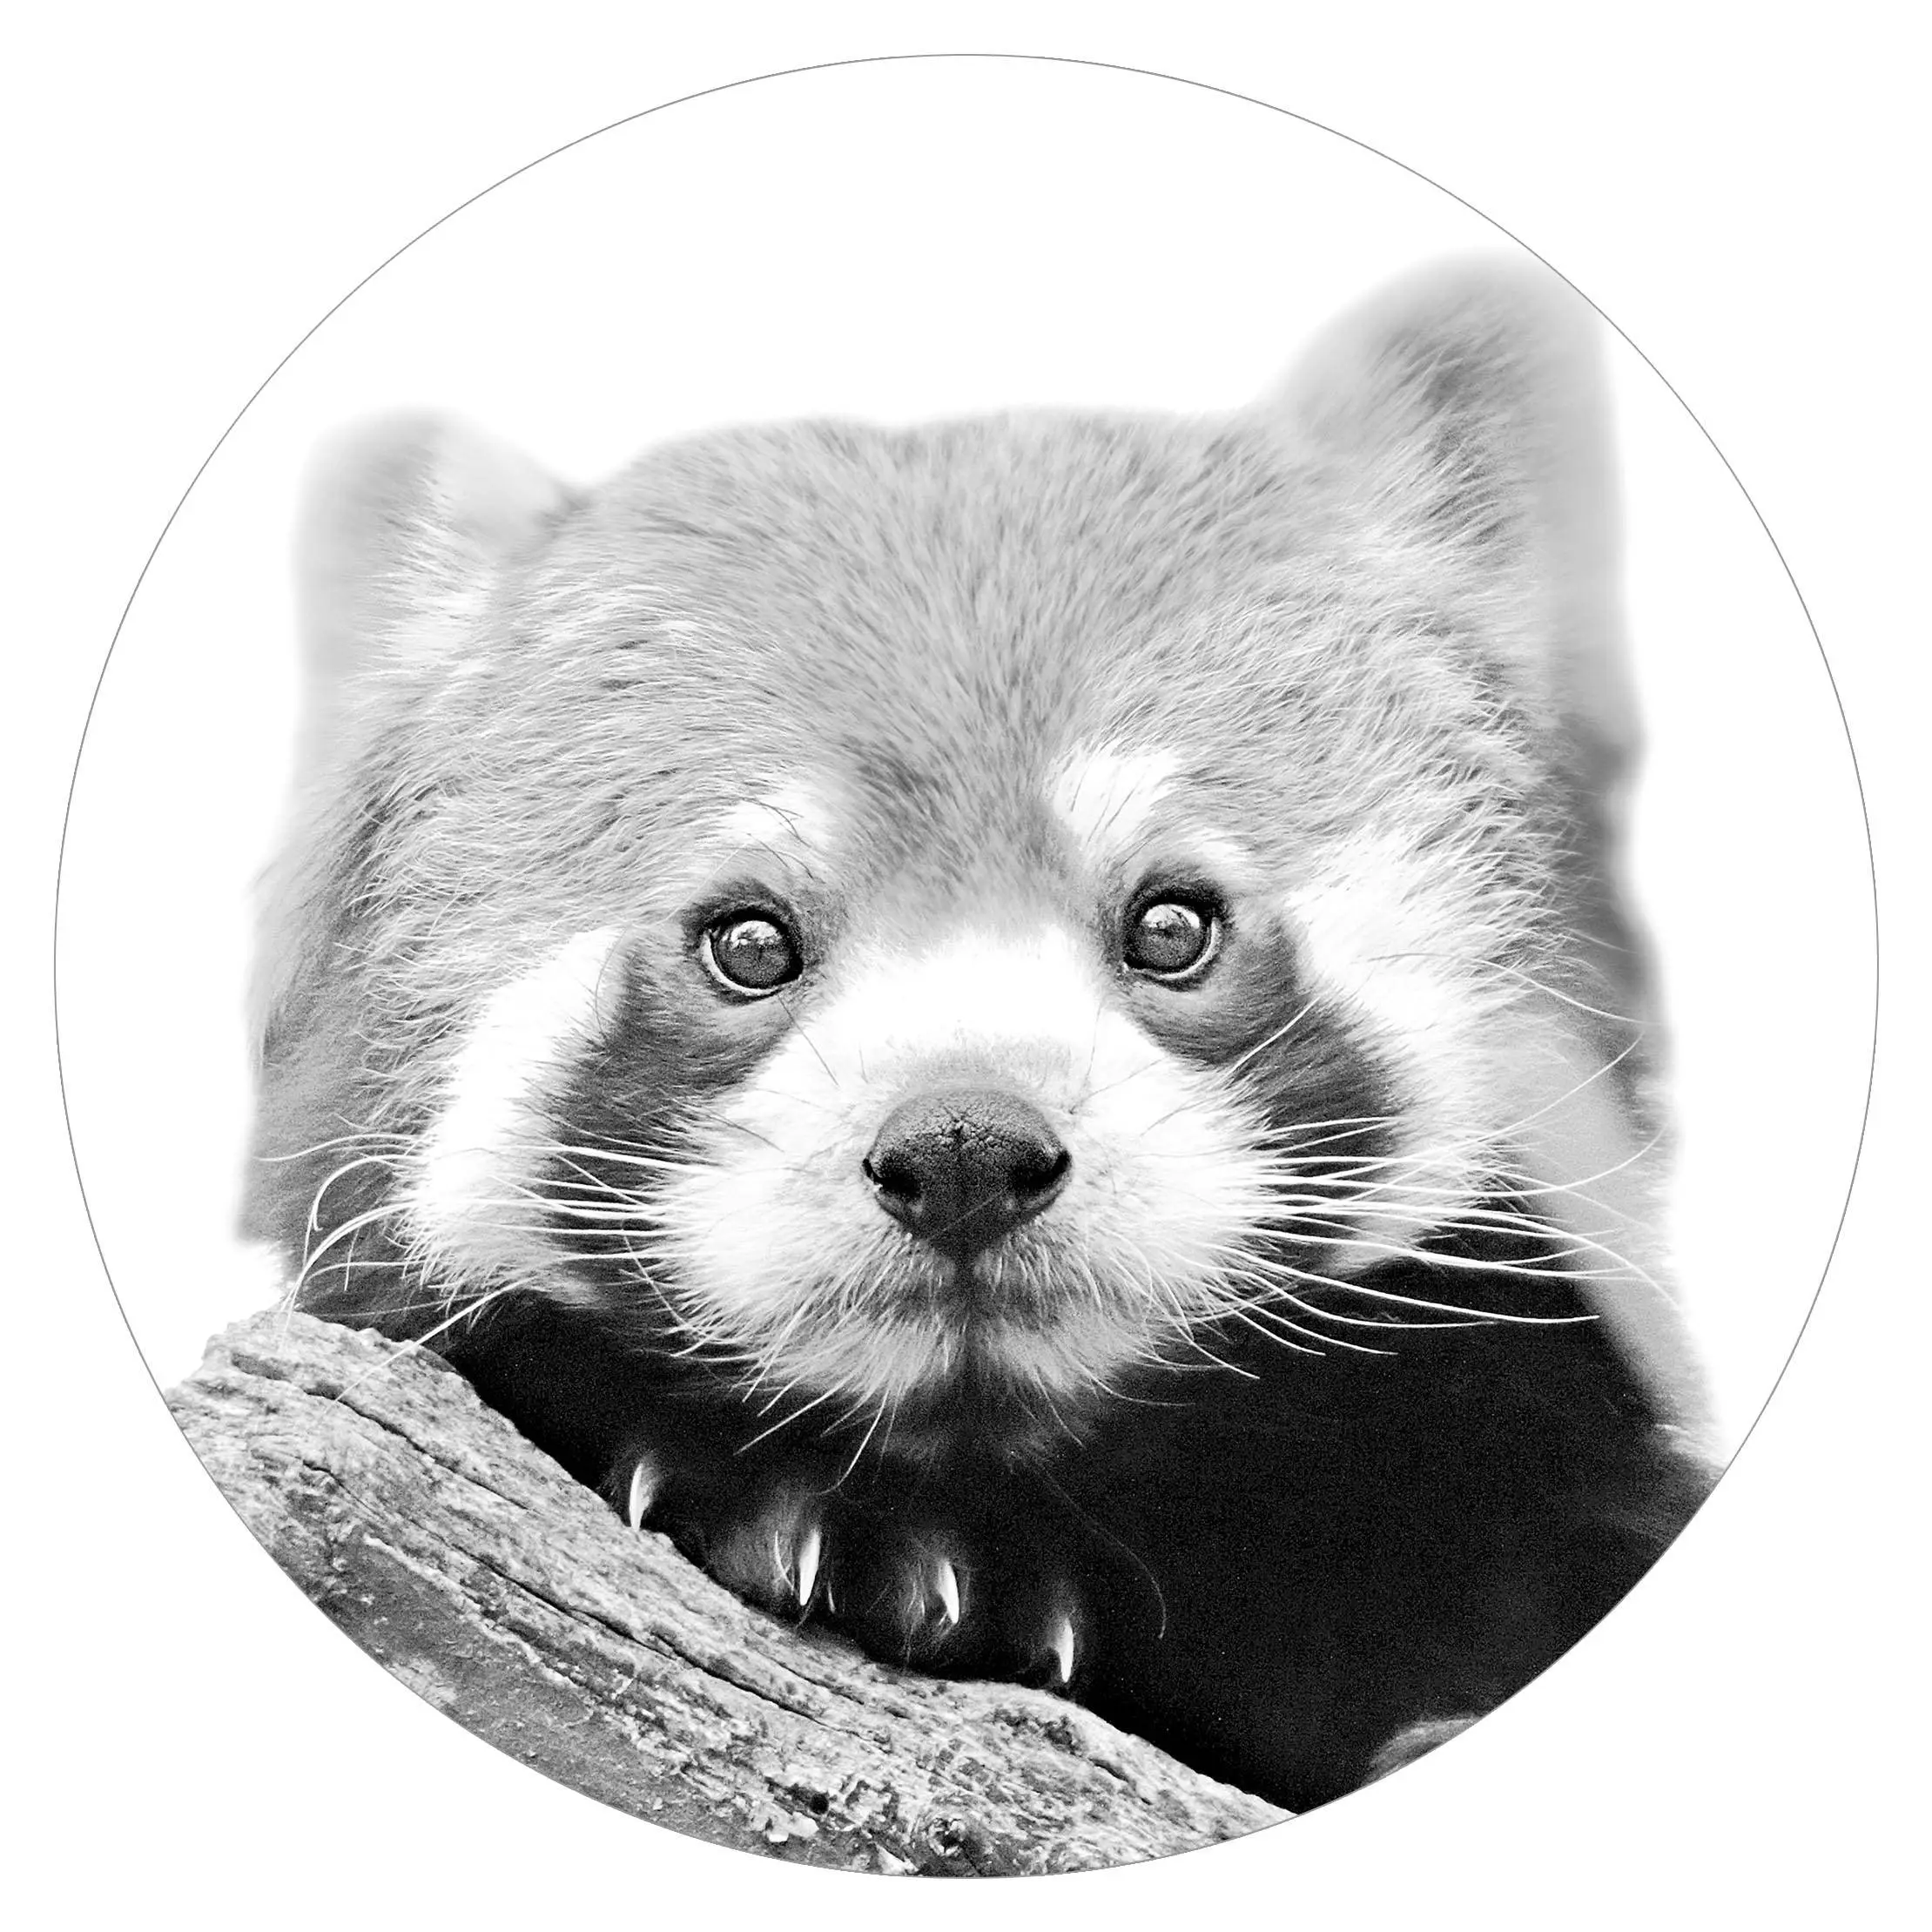 Roter Schwarz-wei脽 in Panda